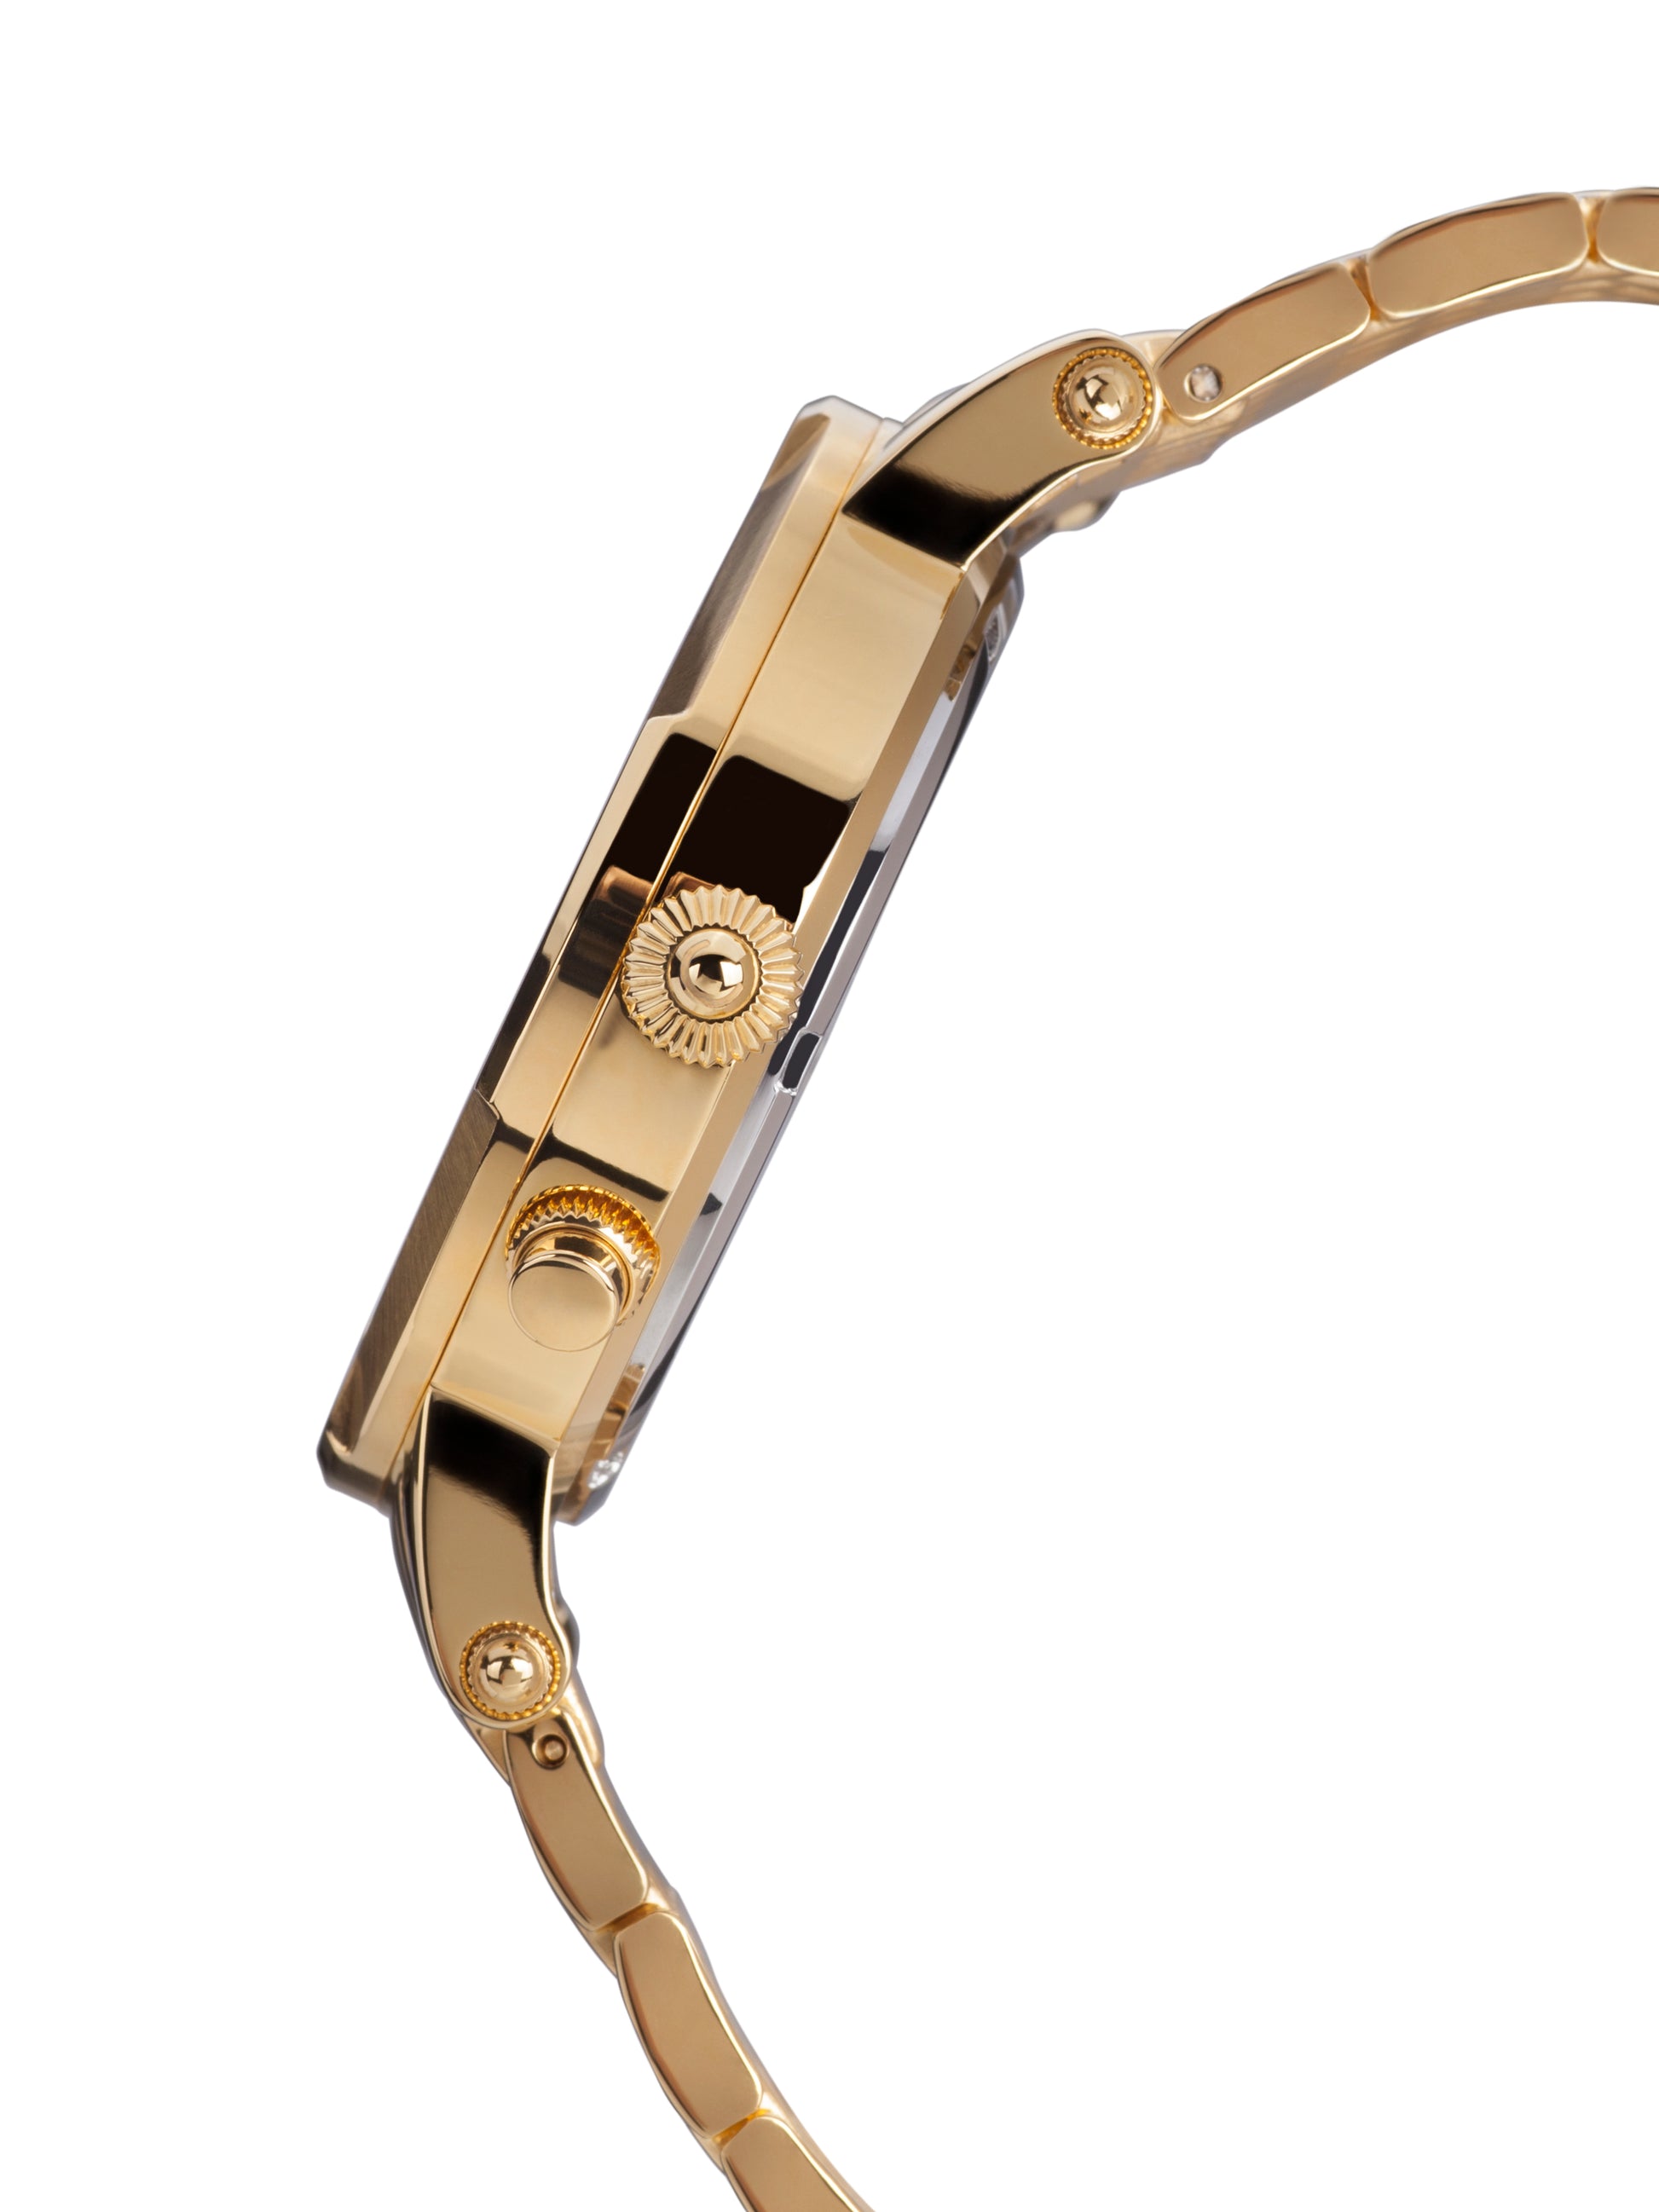 Automatic watches — Ikaro — Chrono Diamond — gold IP